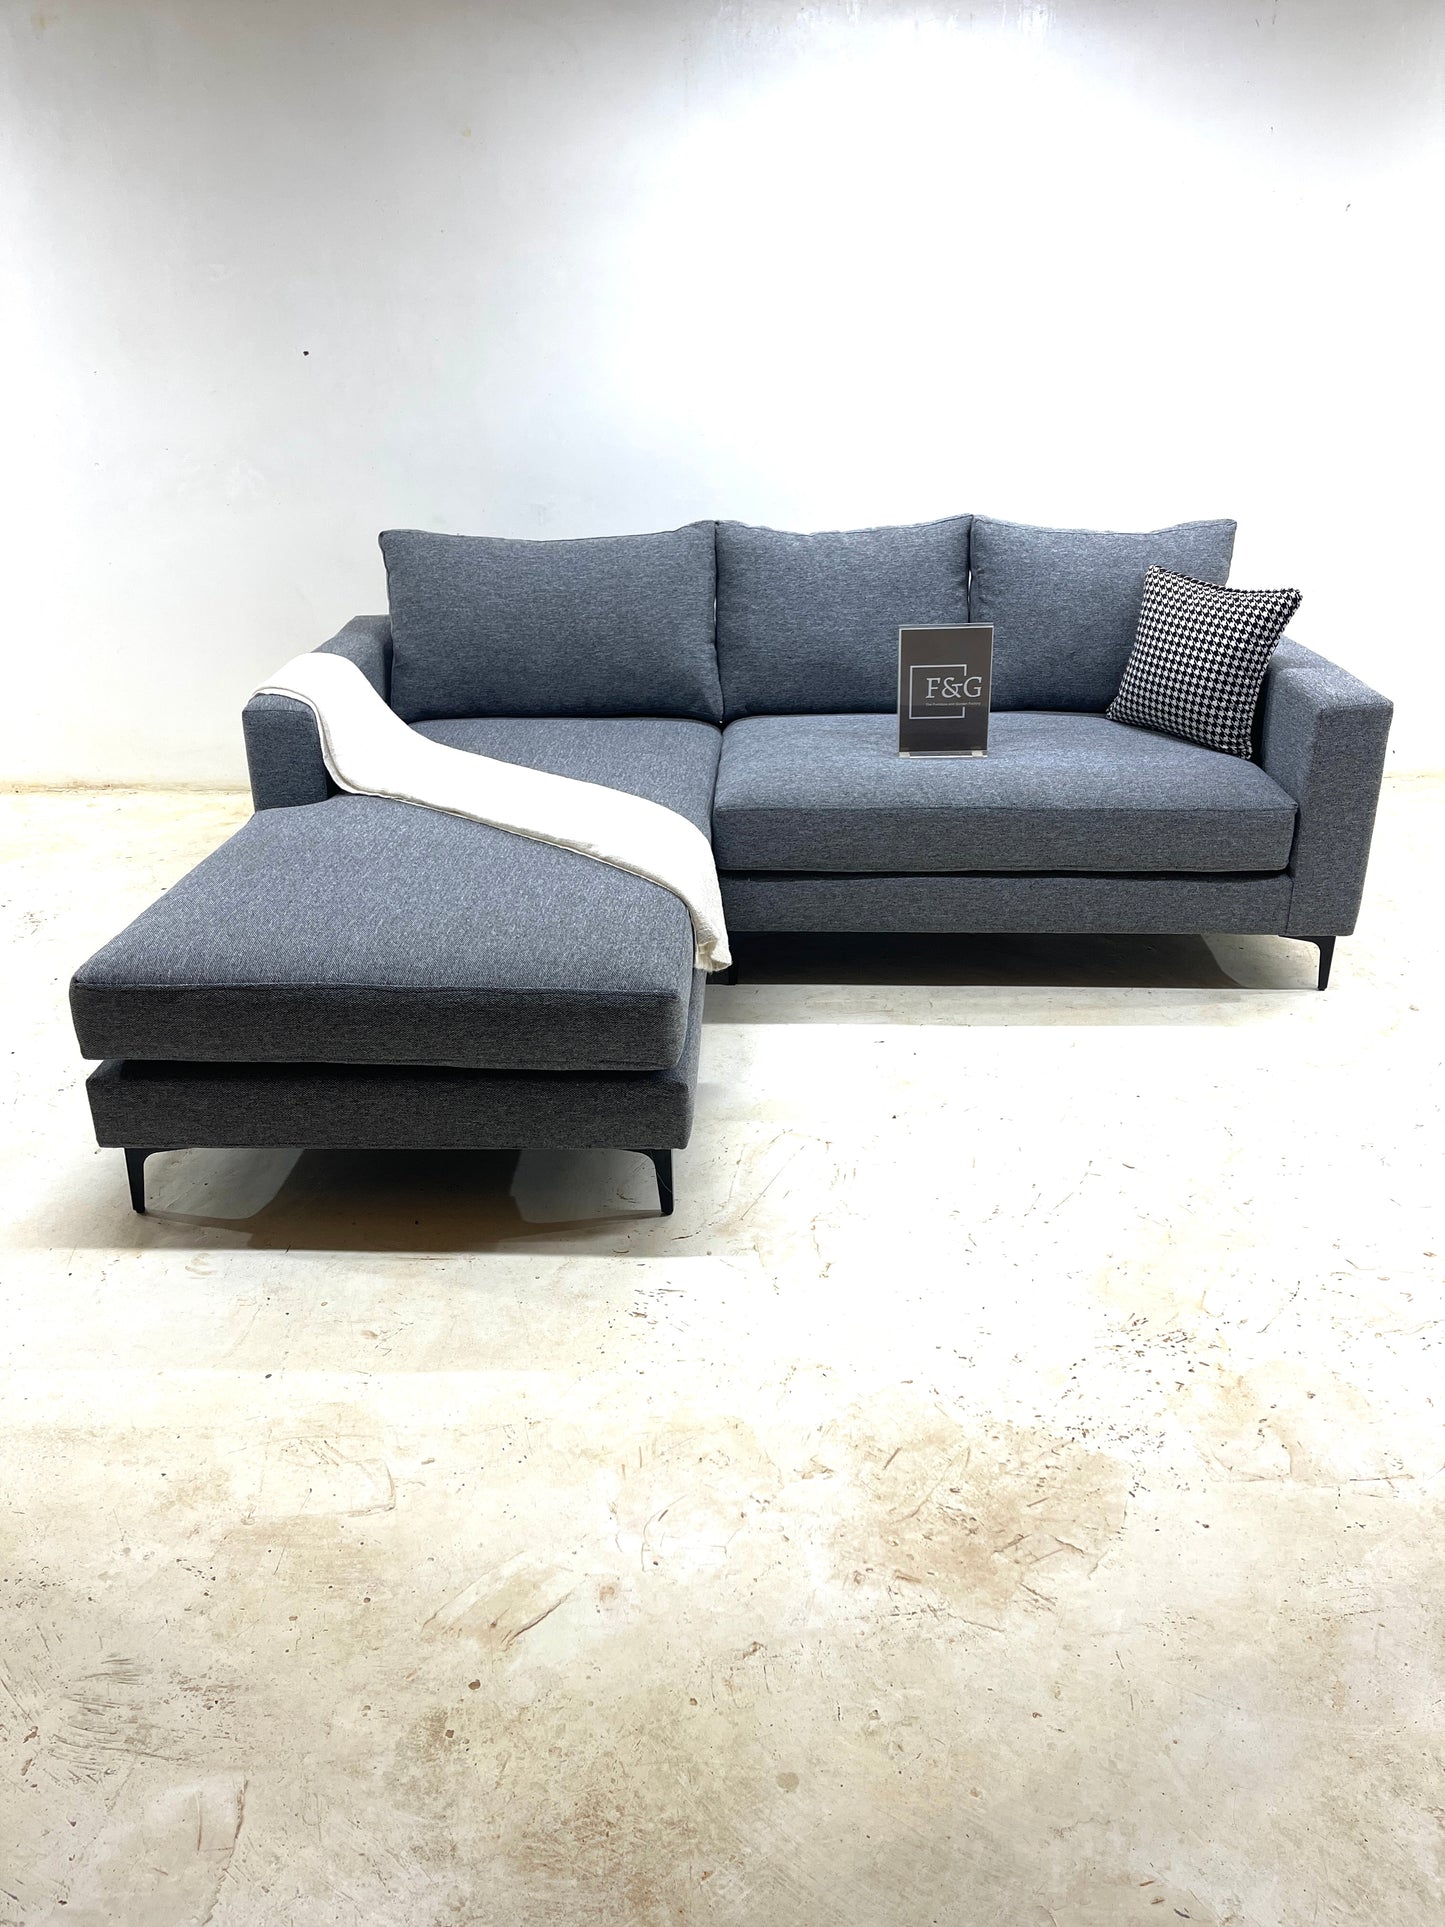 The Urban Sectional Sofa